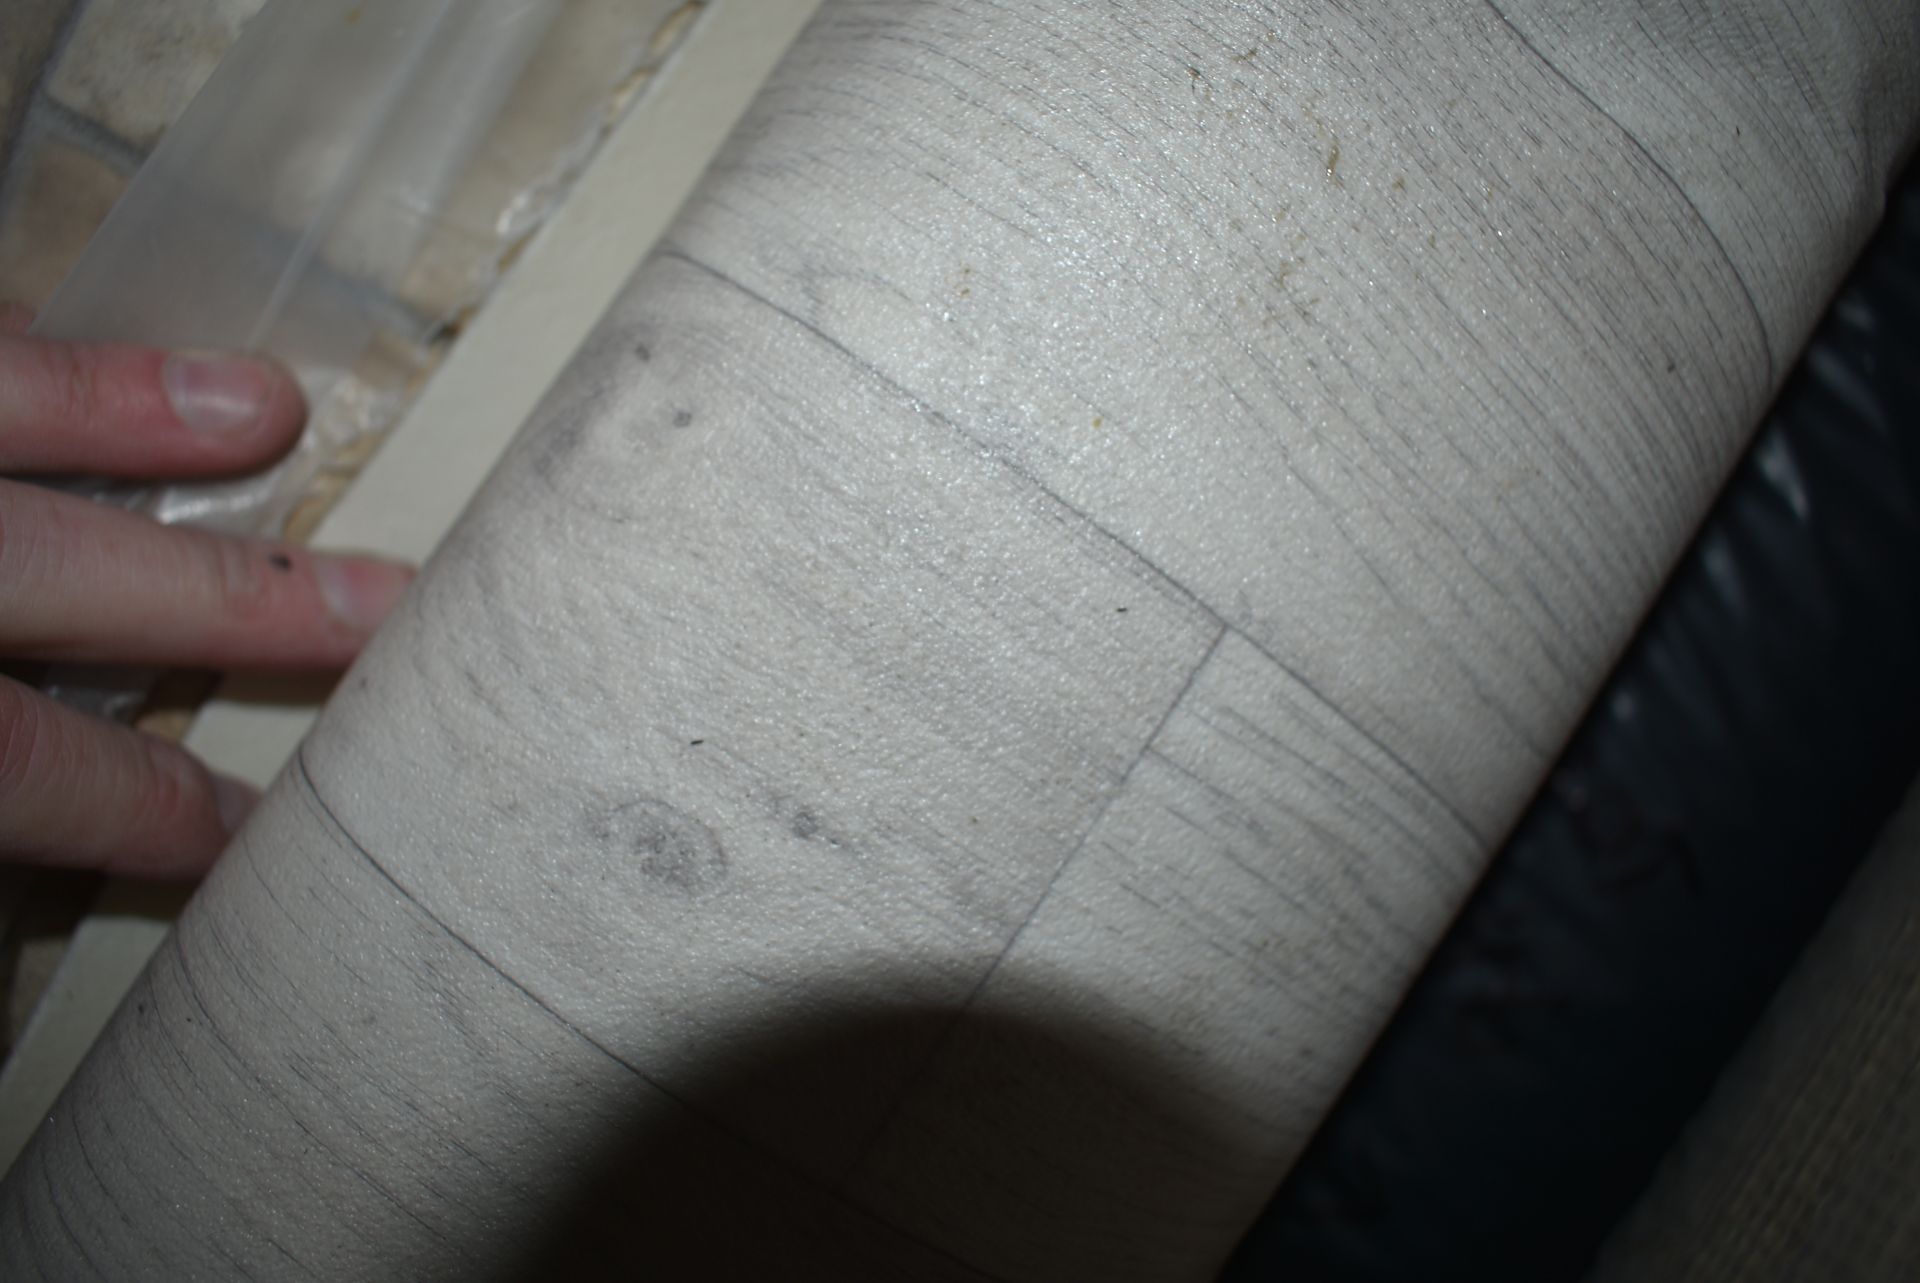 3m x 2m Roll of Pale Grey Wood Effect Vinyl Flooring